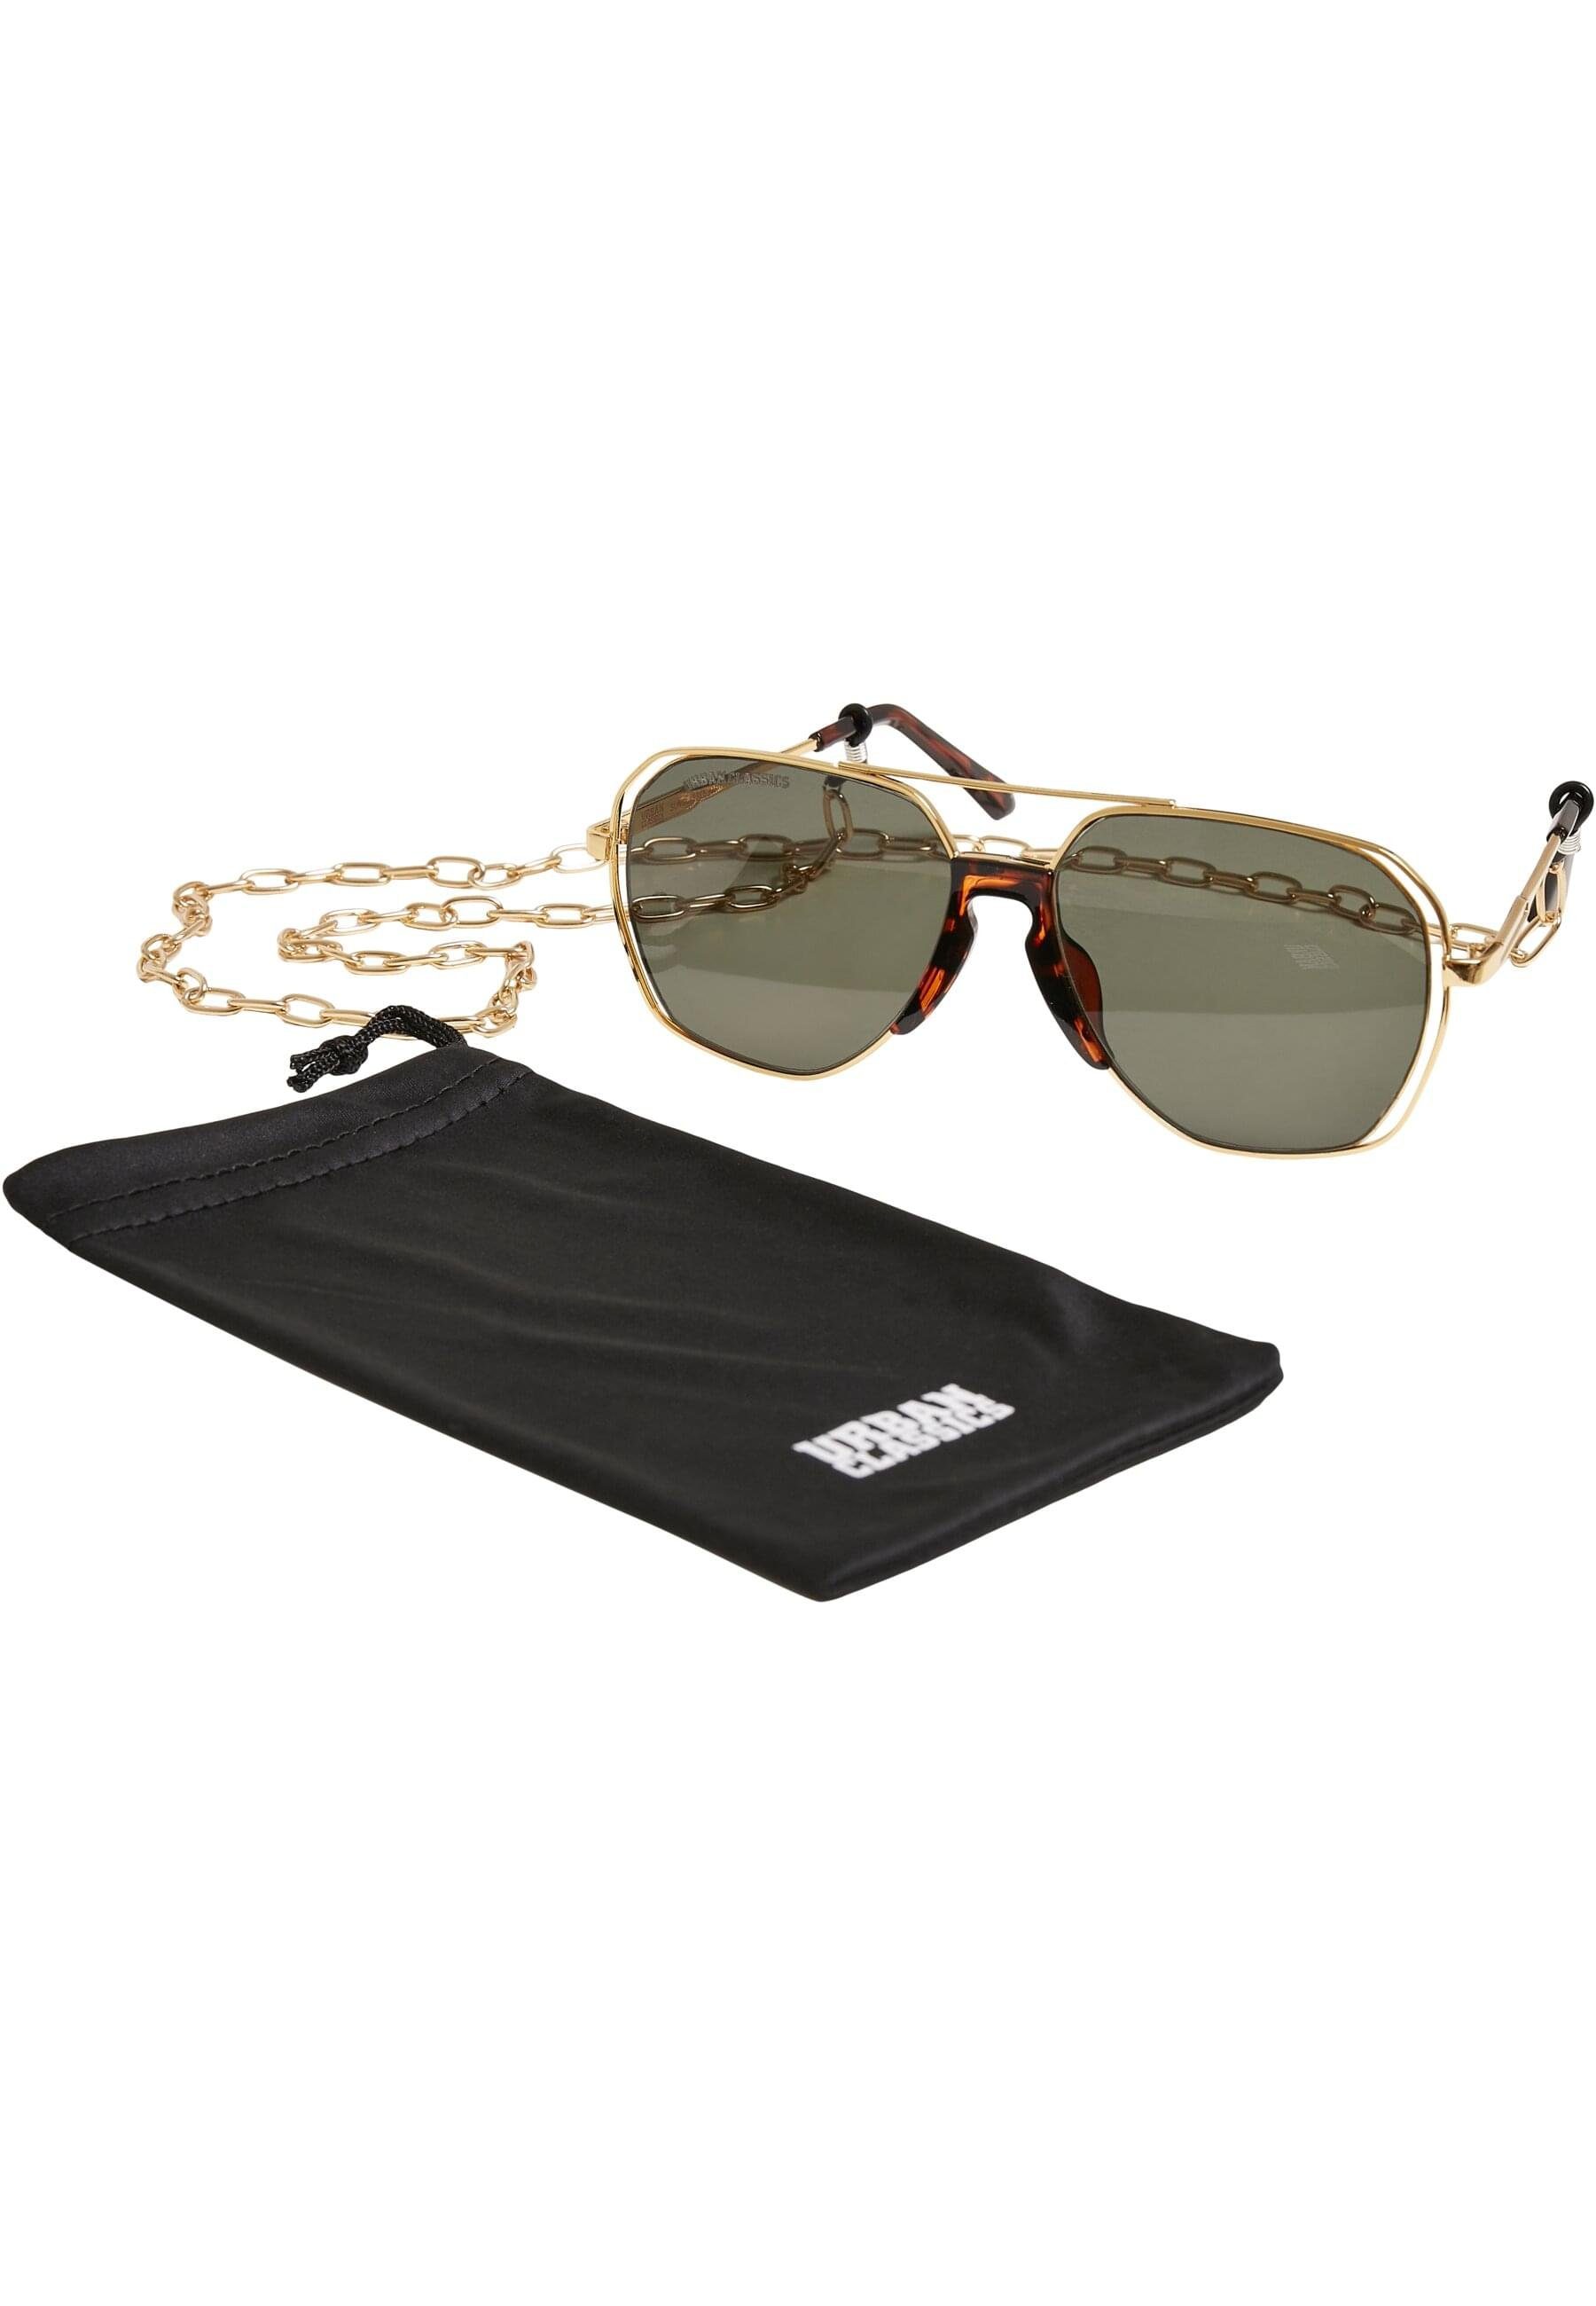 Unisex CLASSICS with Sonnenbrille Sunglasses gold URBAN Chain Karphatos